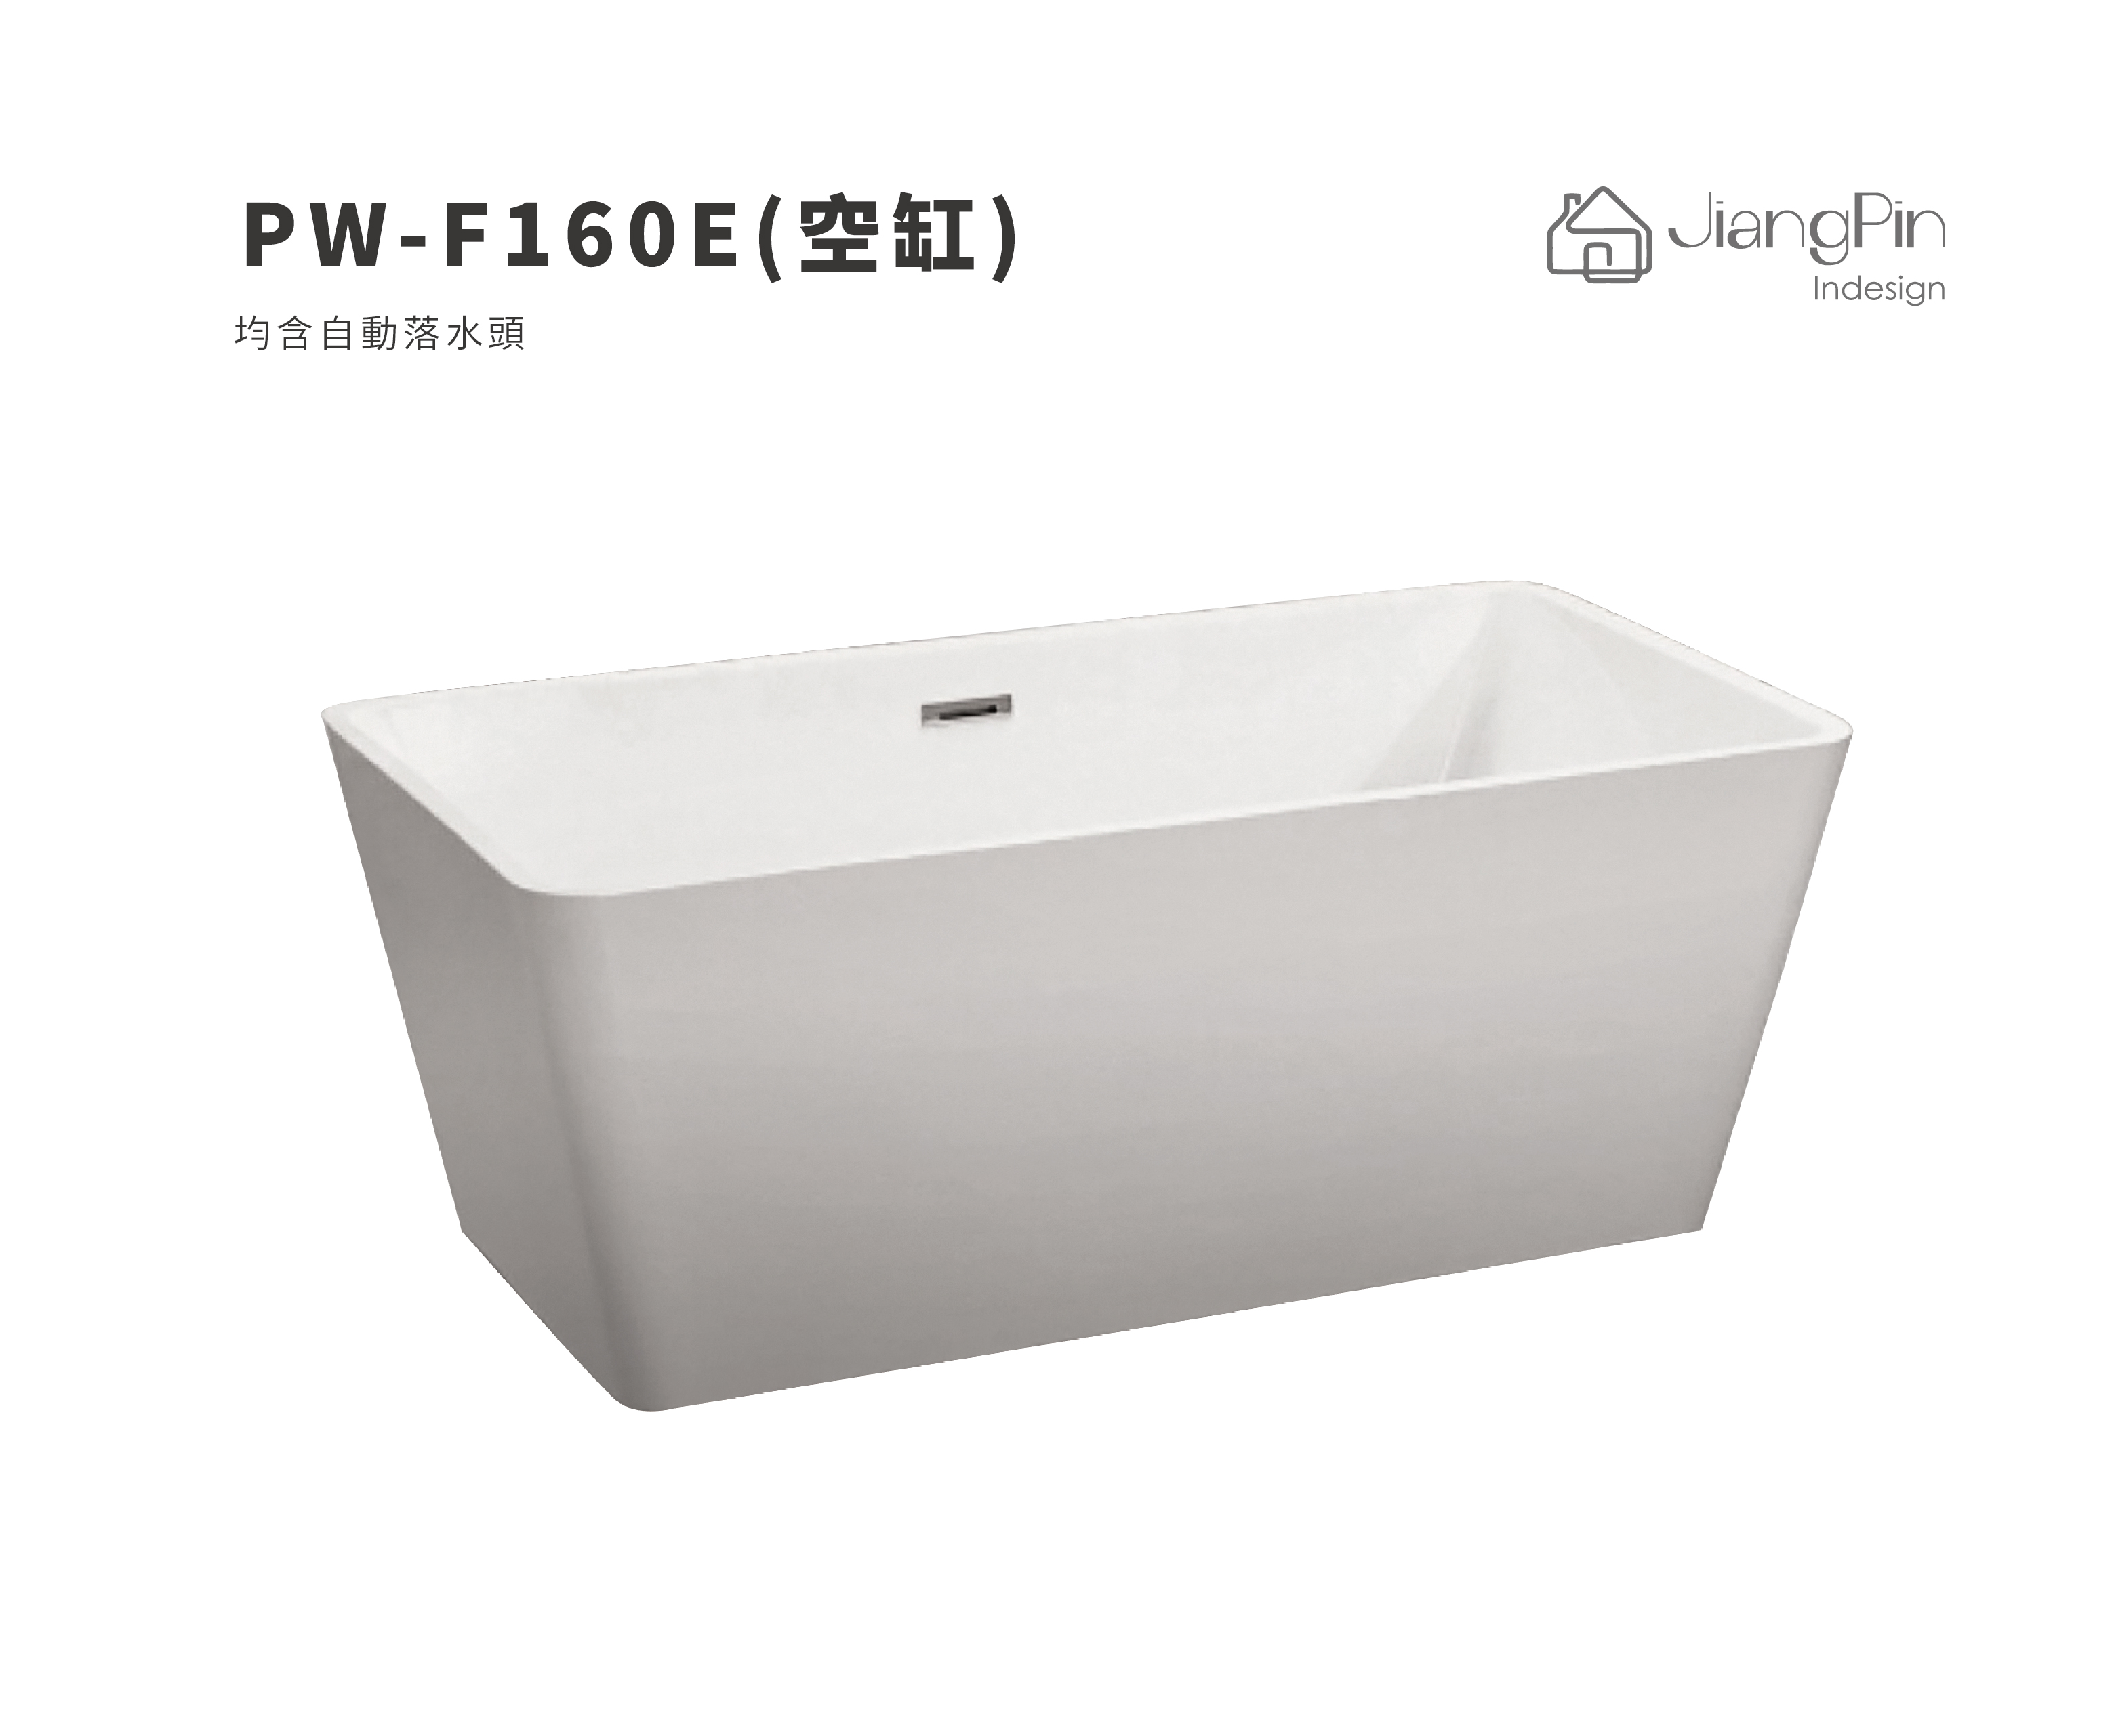 PW-F160E( 空缸) 壓克力浴缸 130-170cm